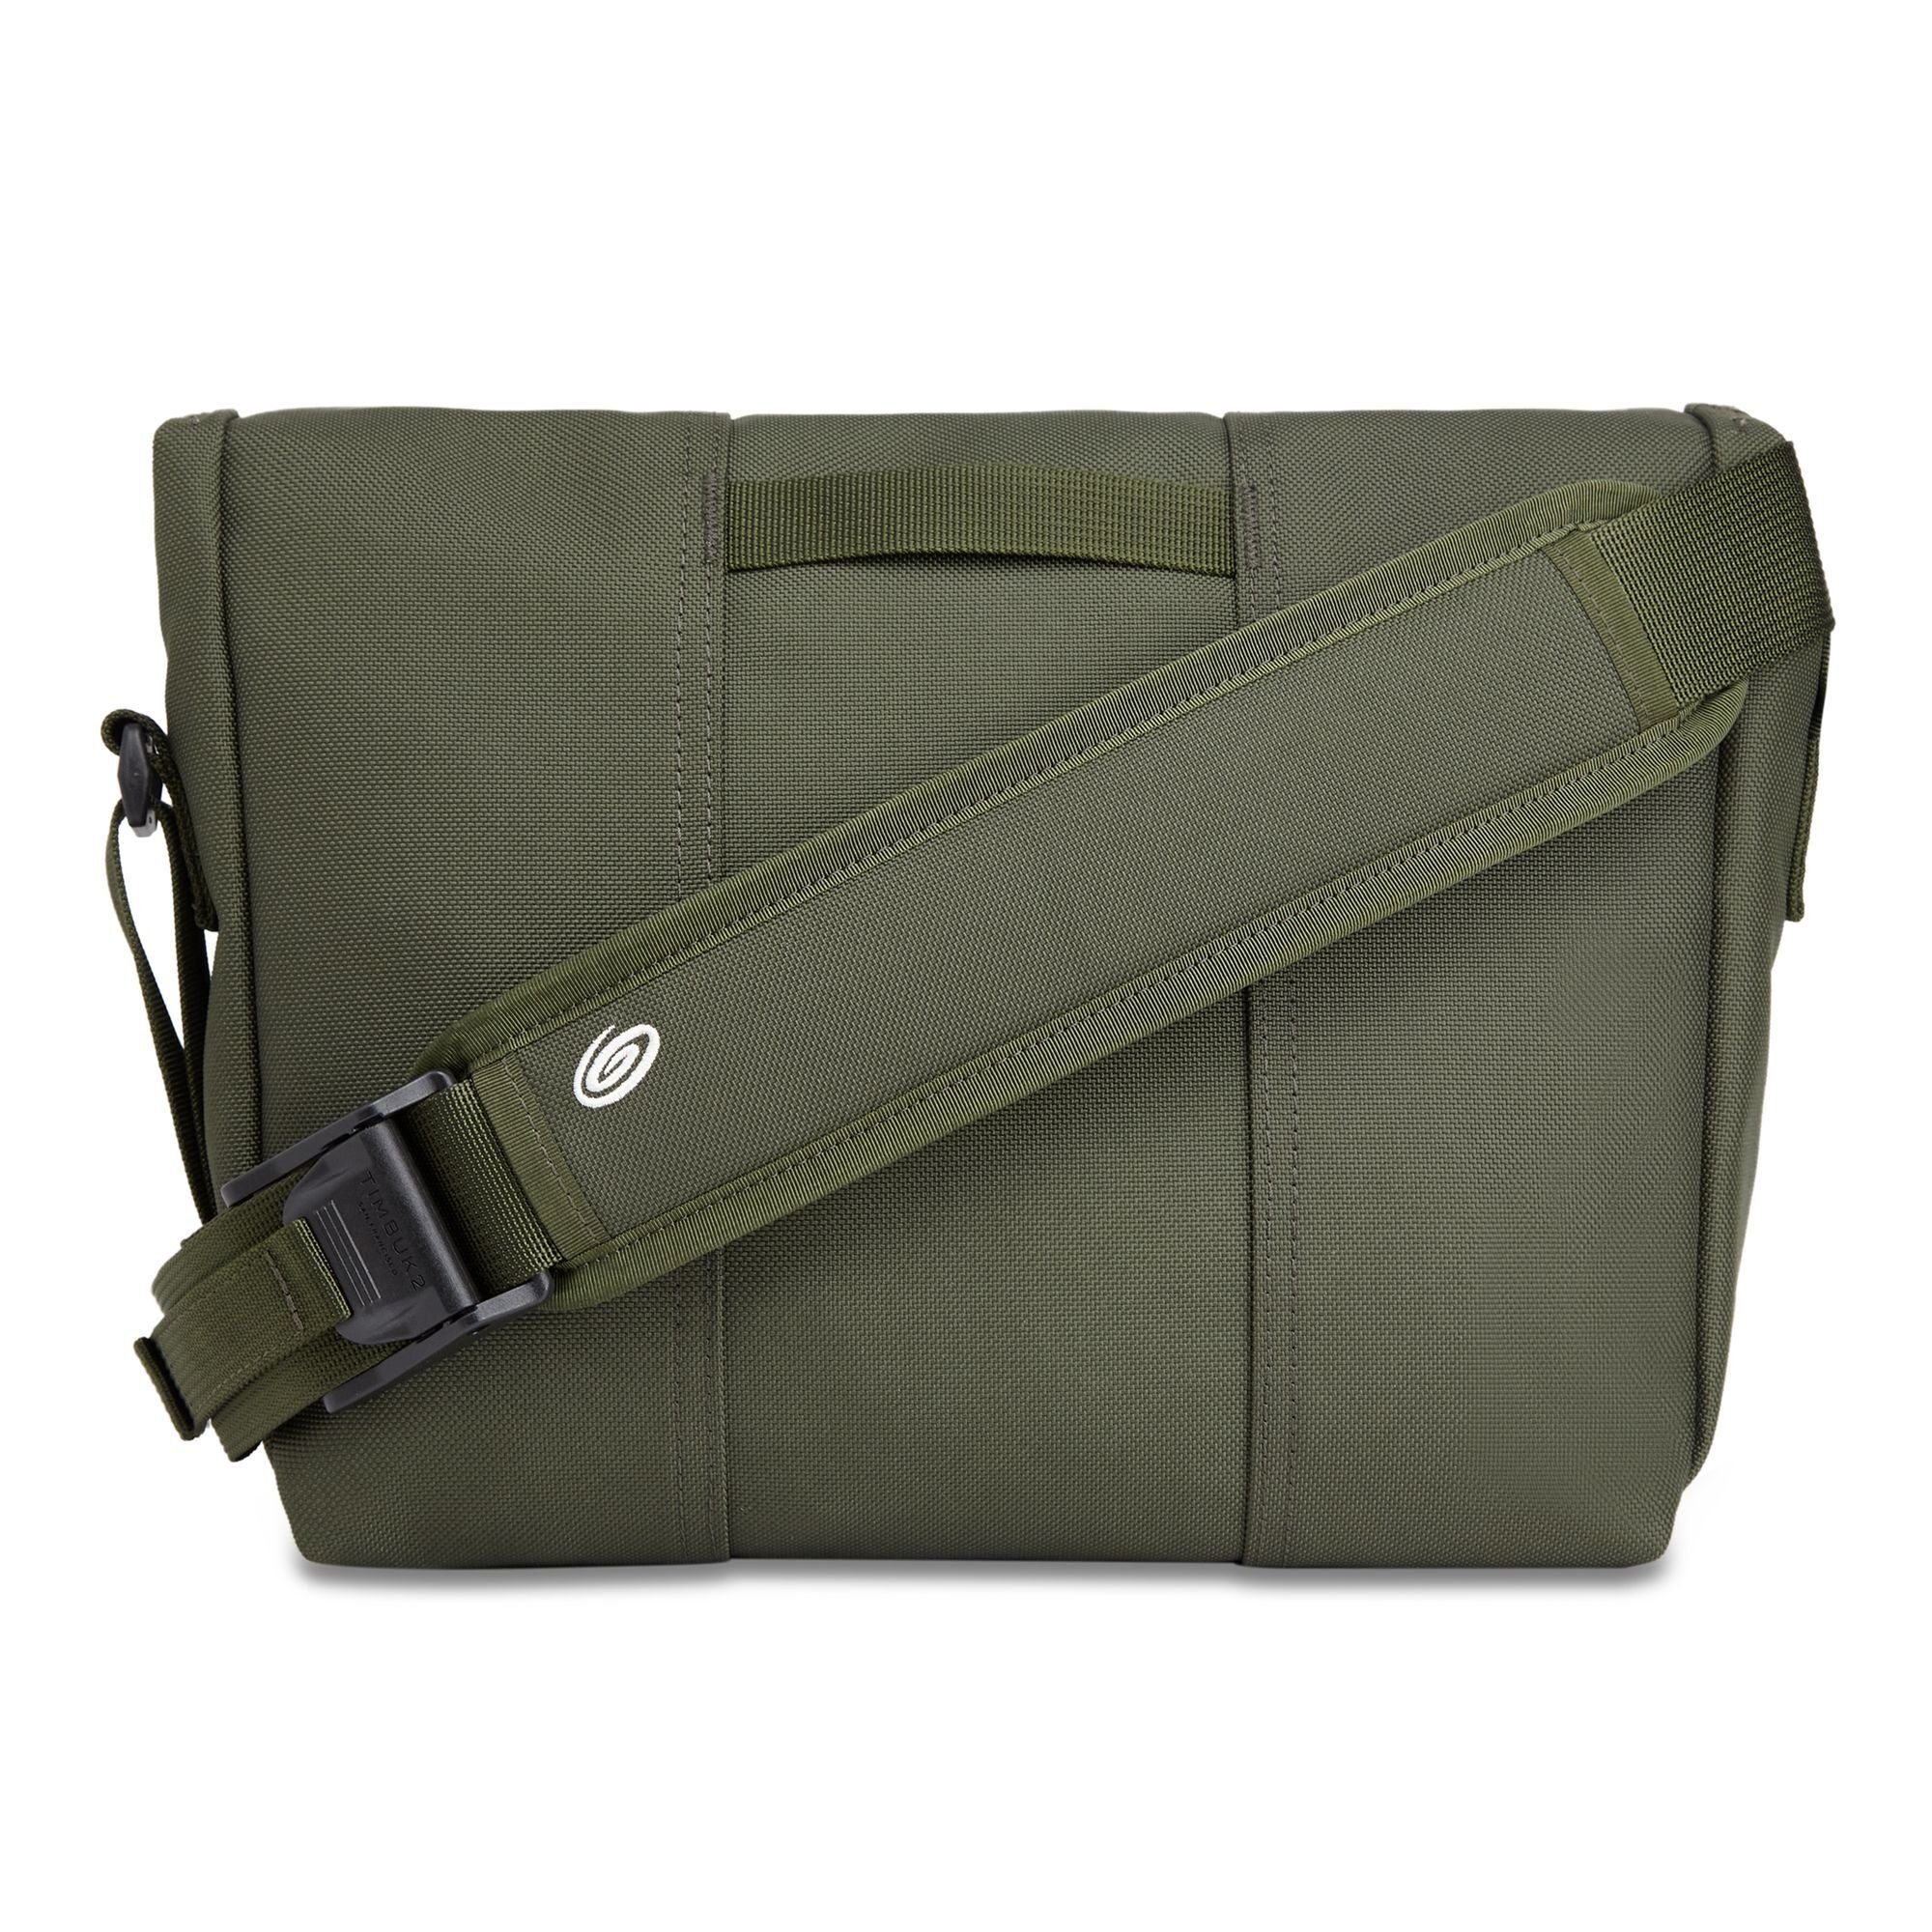 Timbuk2 Messenger Bag Heritage, army eco Nylon